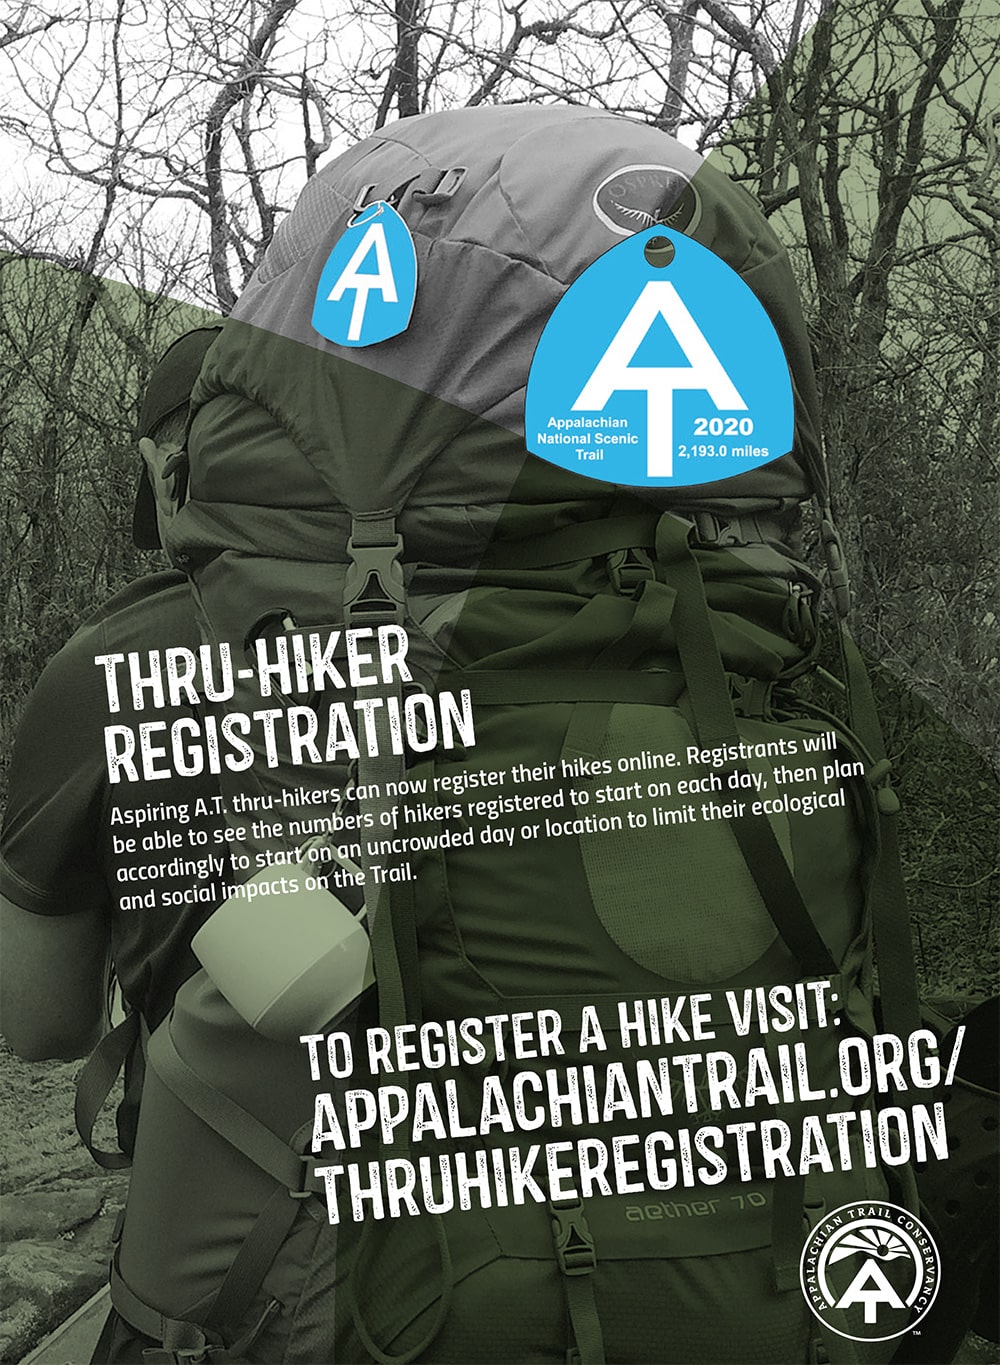 Appalachian Trial Hiker Registration Advertisement